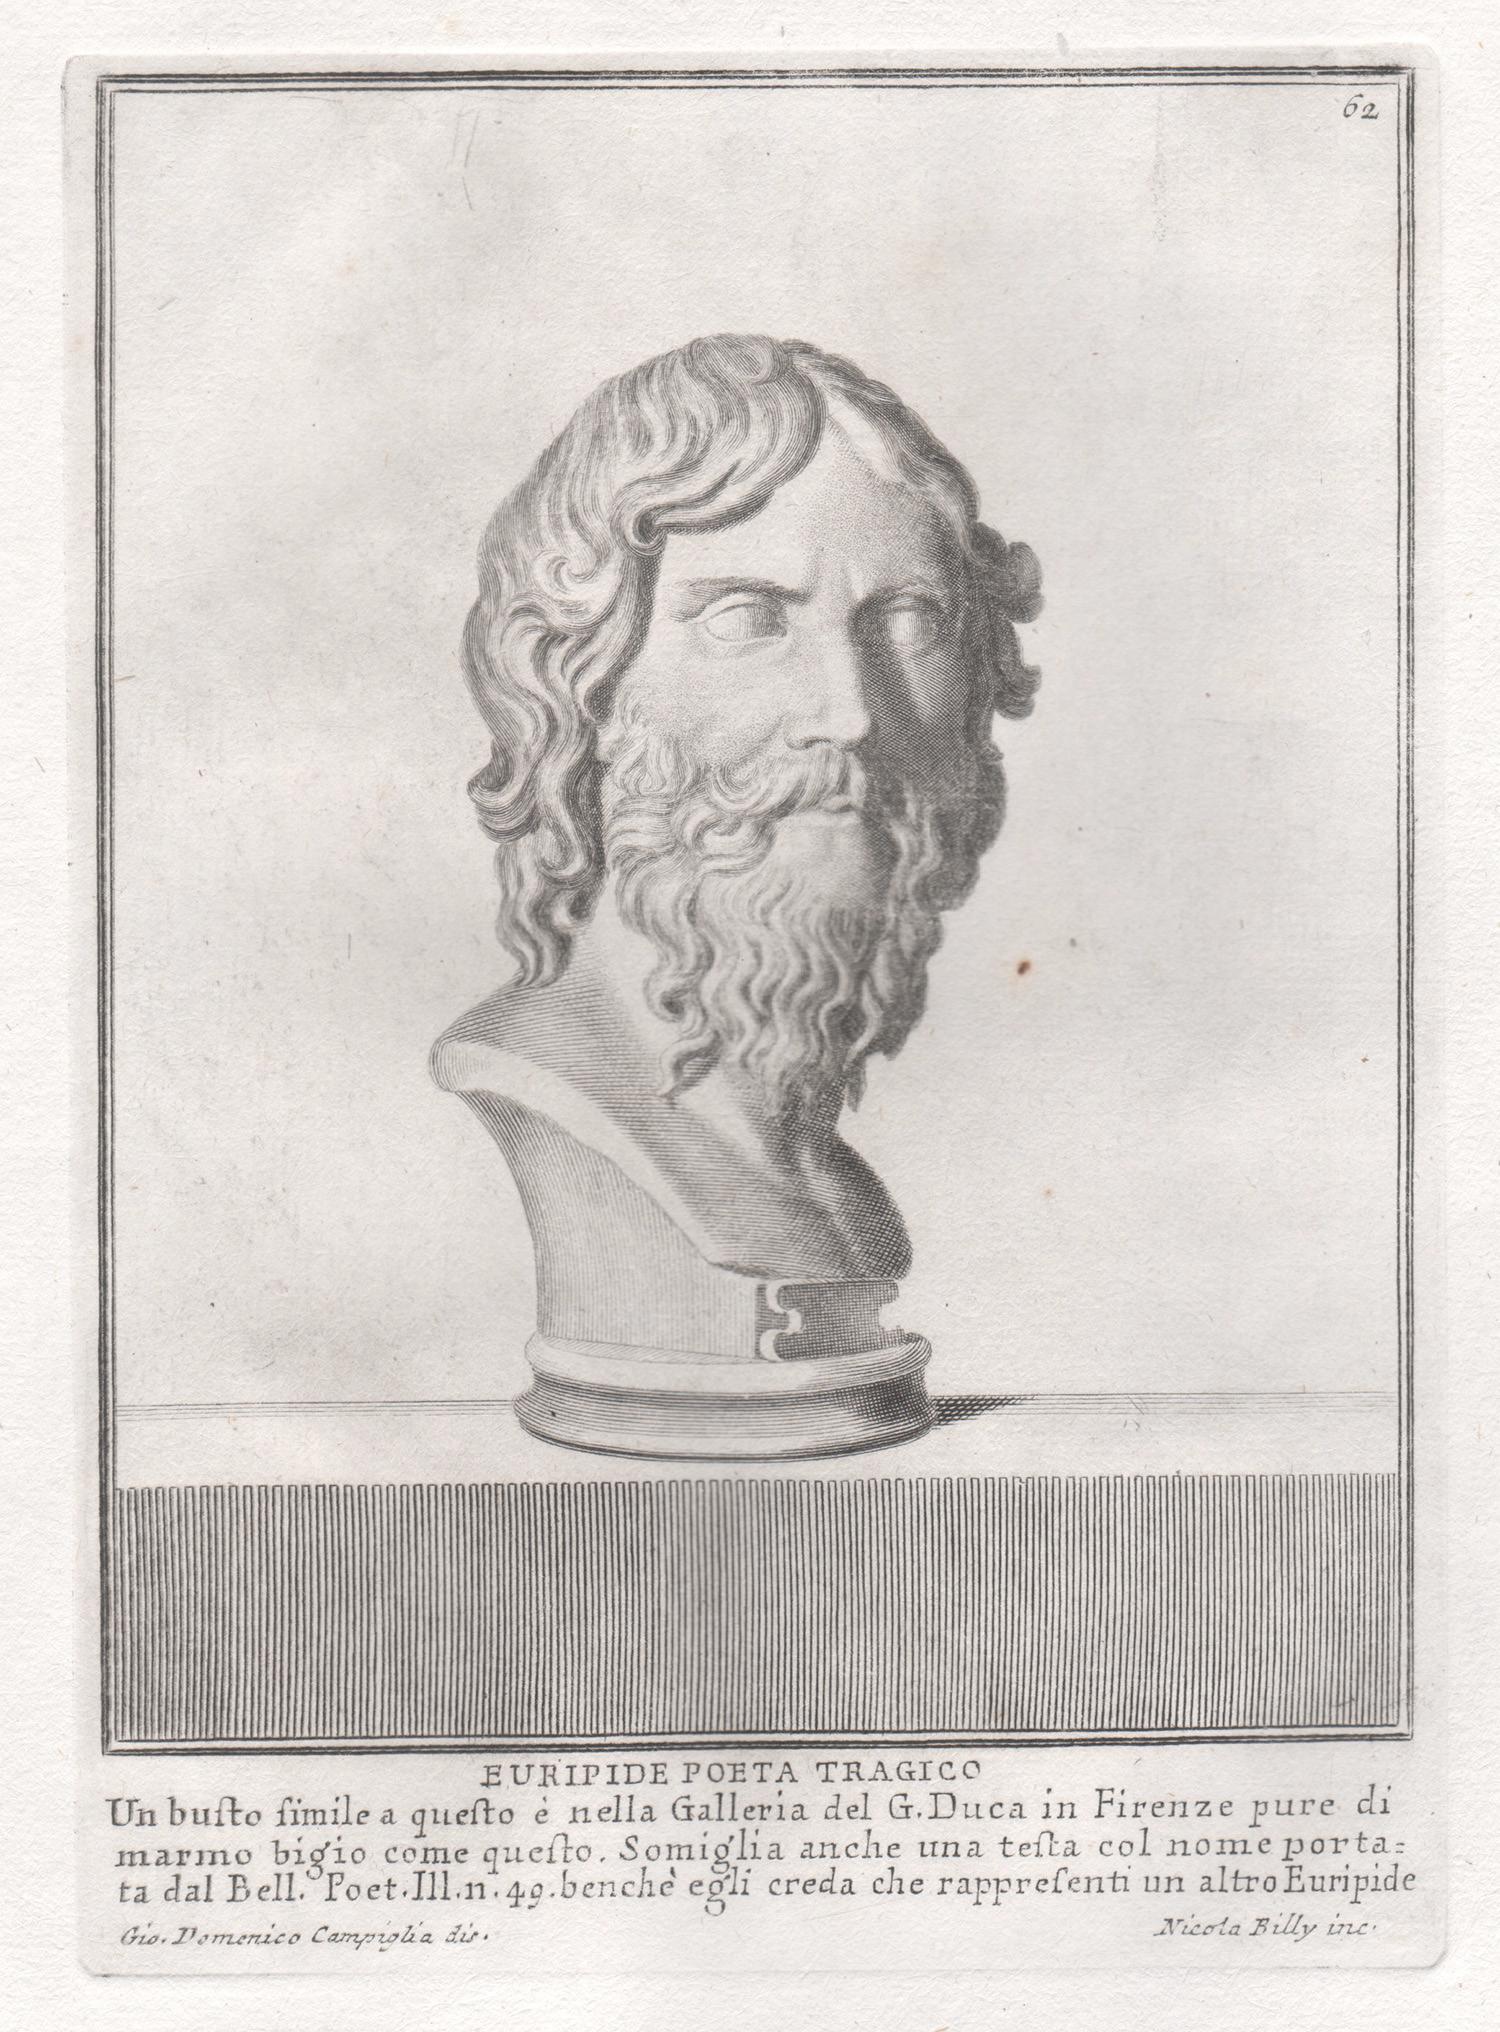 Eurpipipide, Antike griechische Gravur, 18. Grand Tour, klassischer antiker Druck